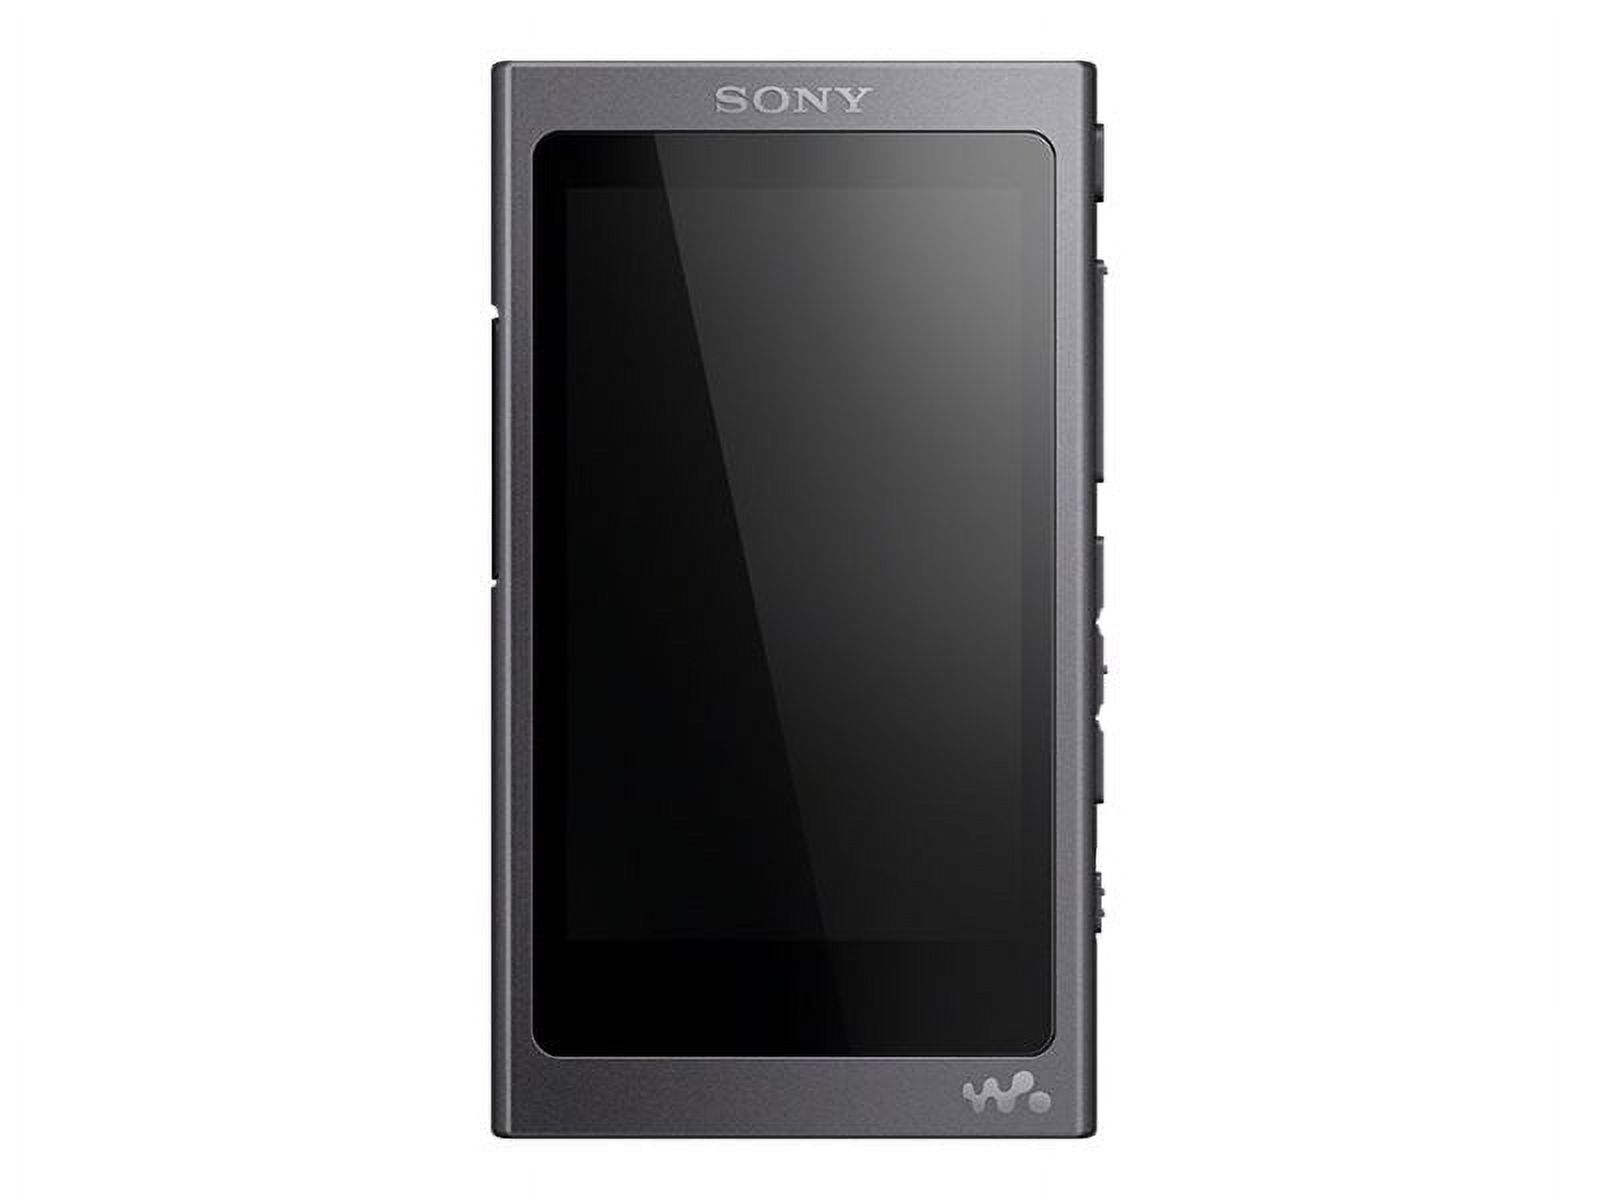 Sony Walkman NW-A45 - Digital player - 16 GB - grayish black - image 3 of 5